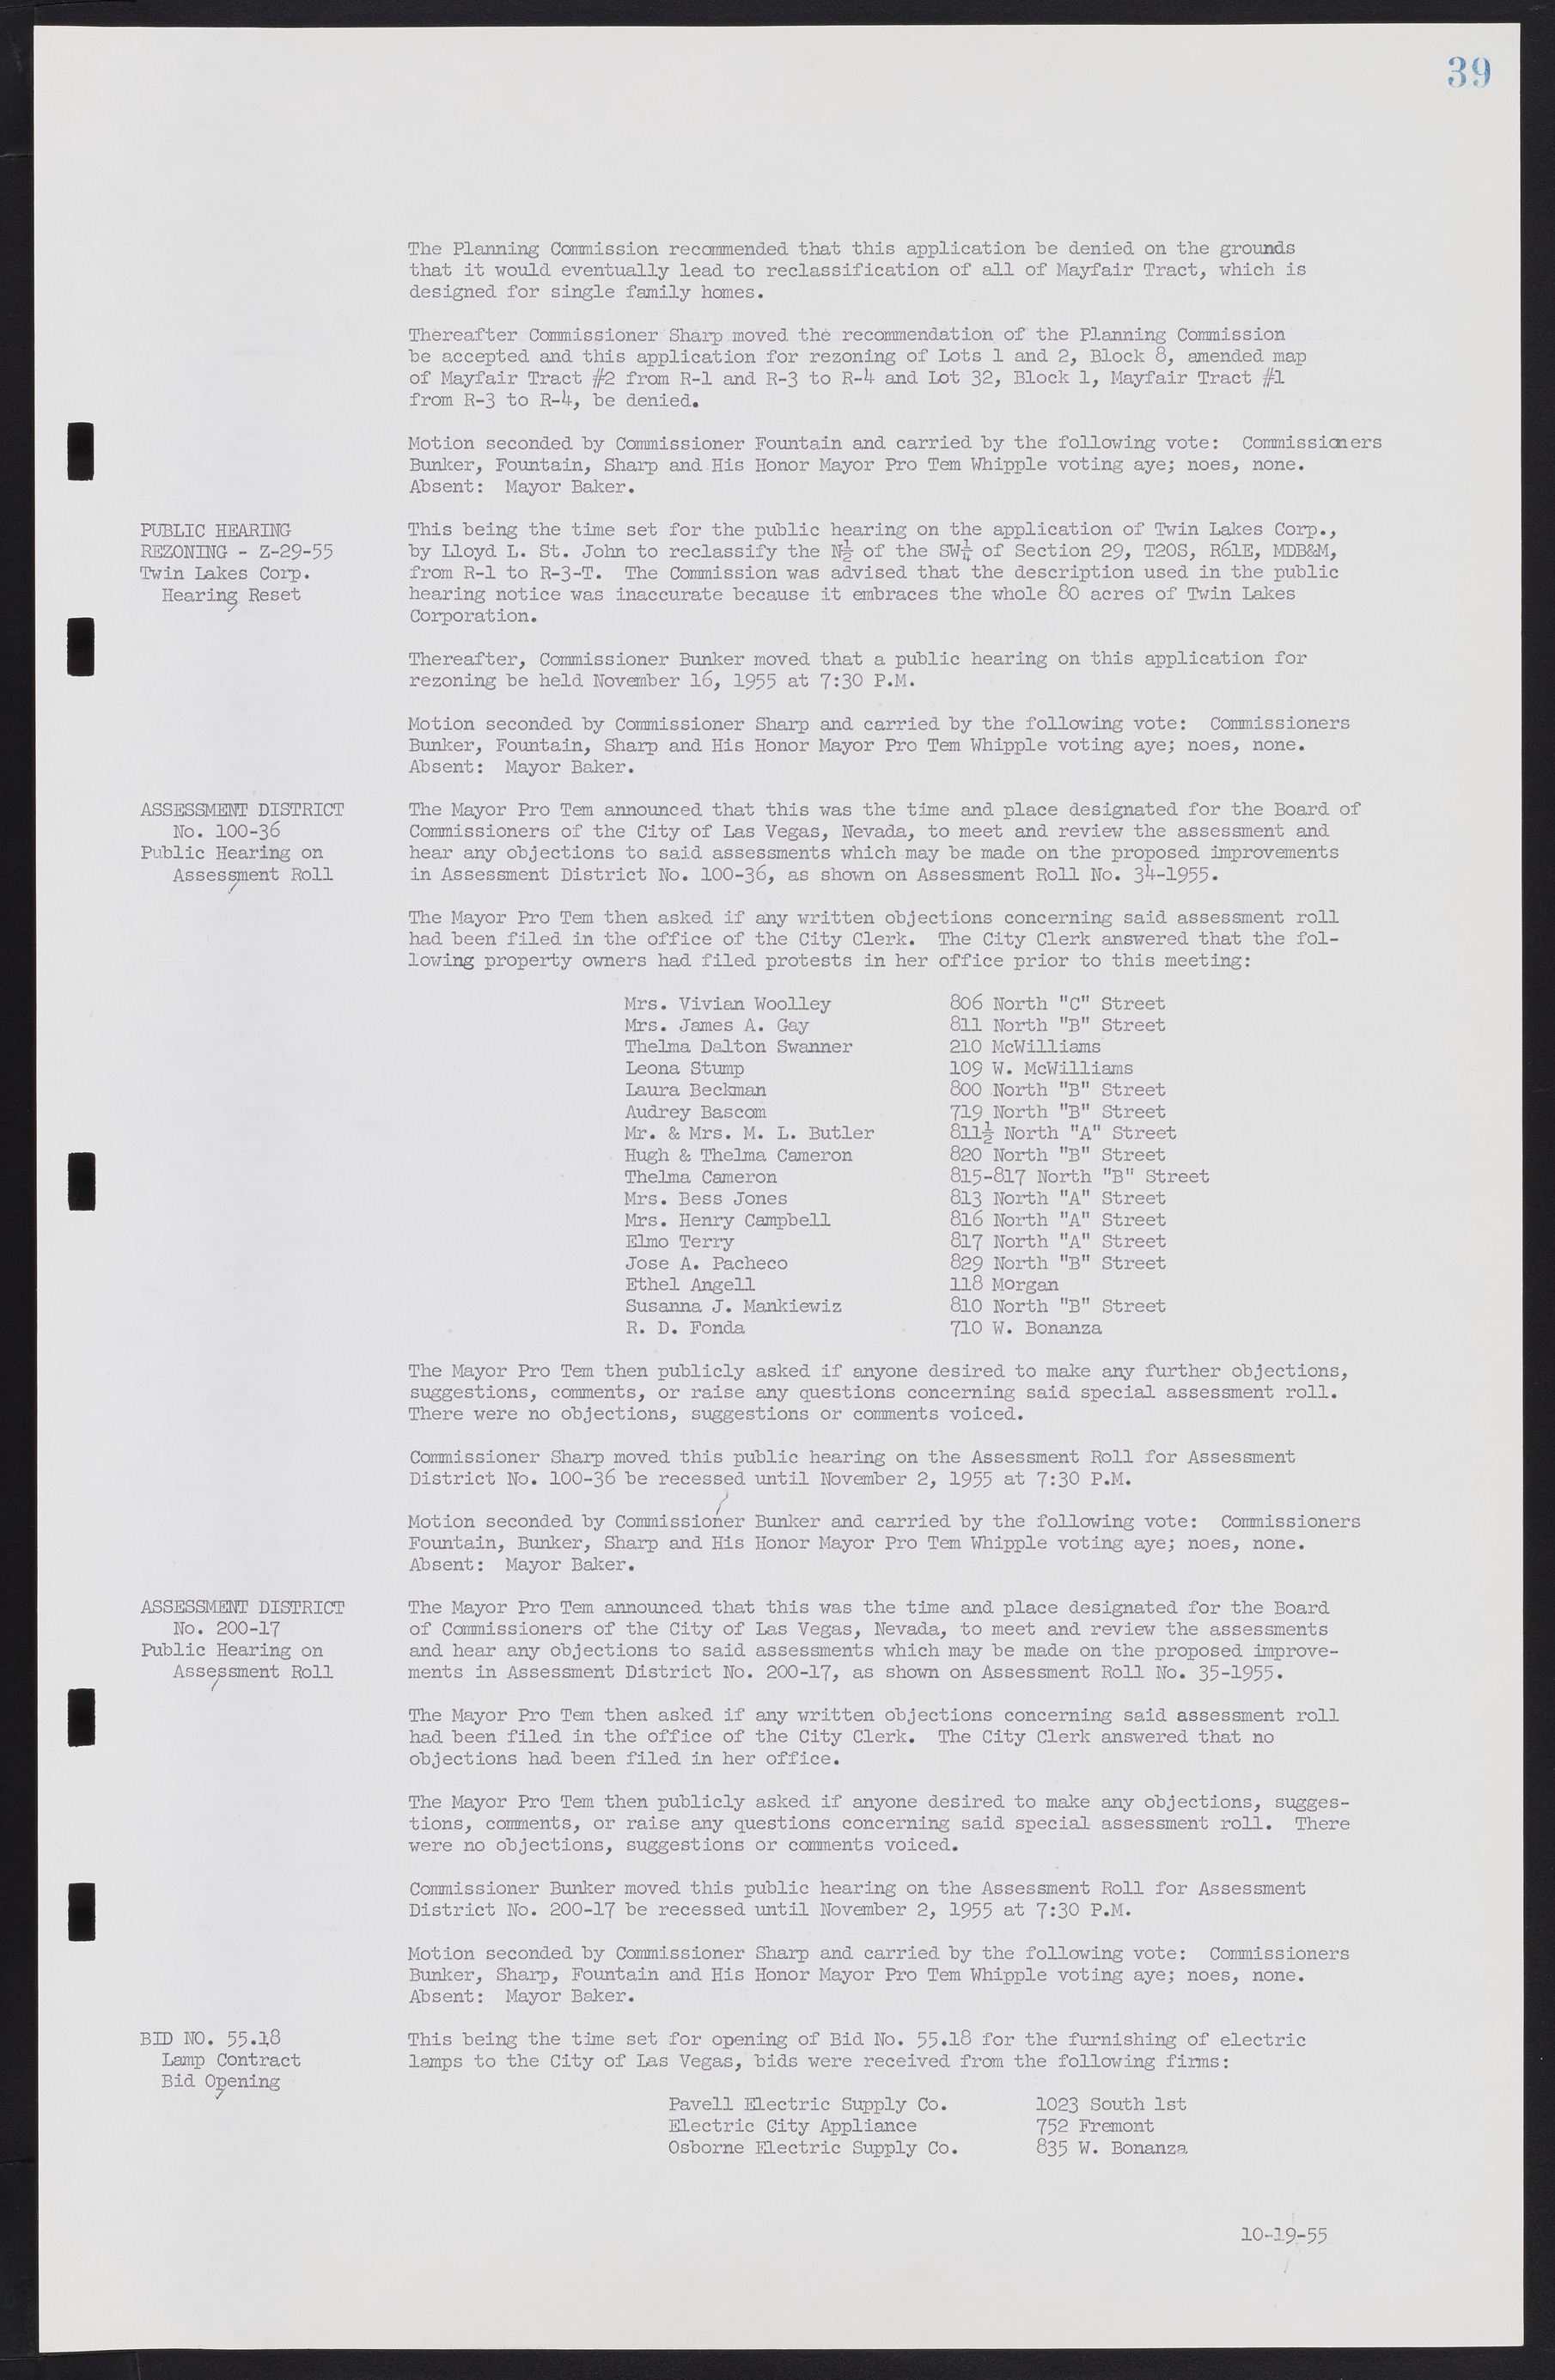 Las Vegas City Commission Minutes, September 21, 1955 to November 20, 1957, lvc000010-45